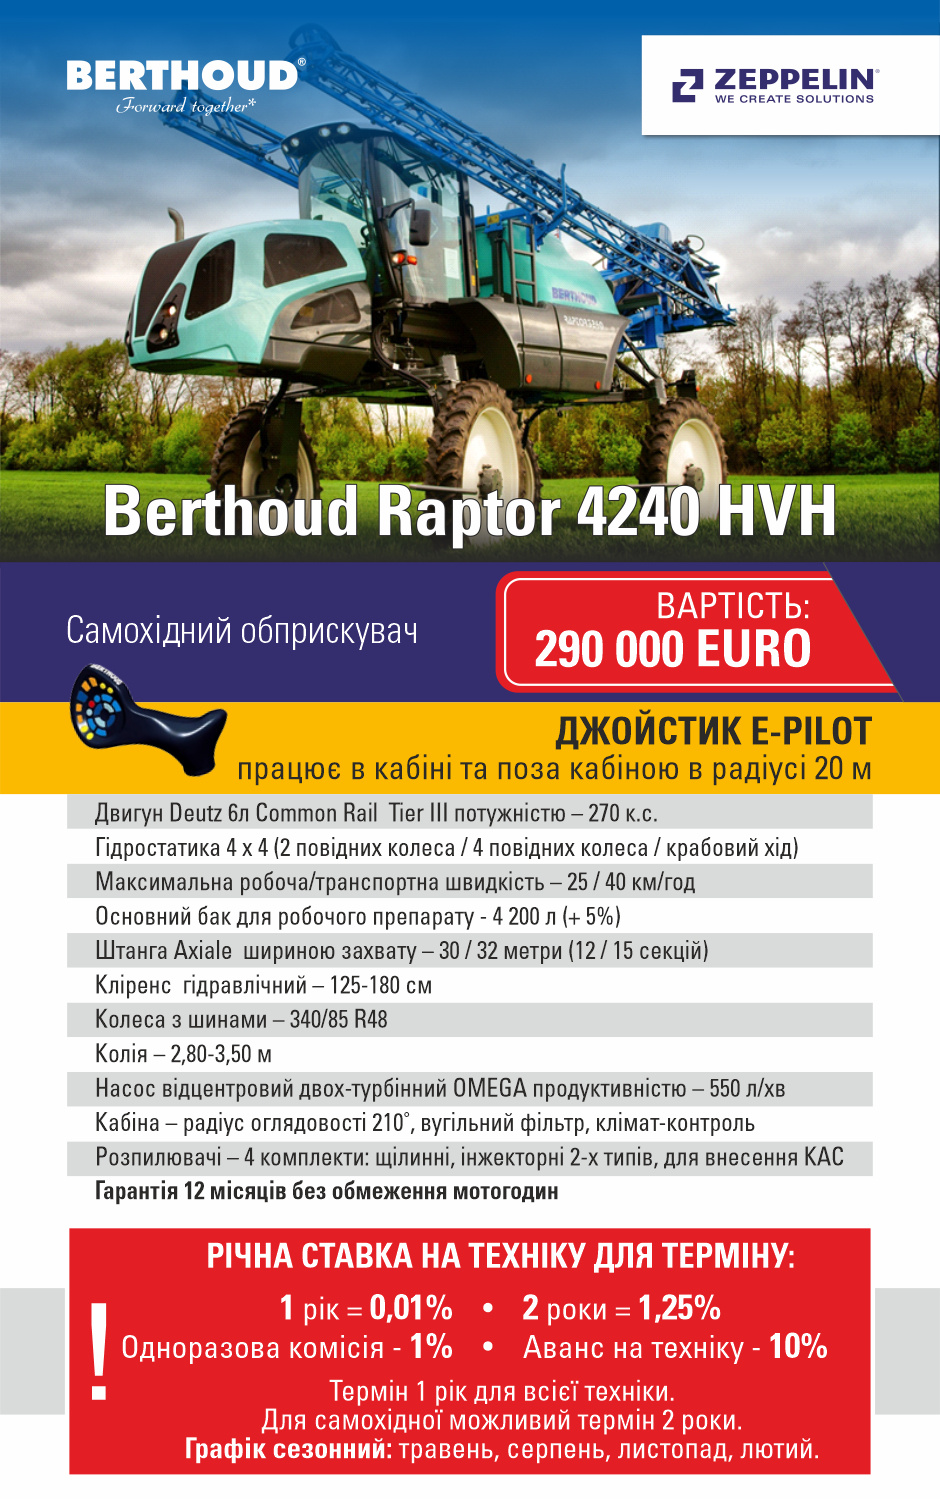 Berthoud Raptor 4240 HVH